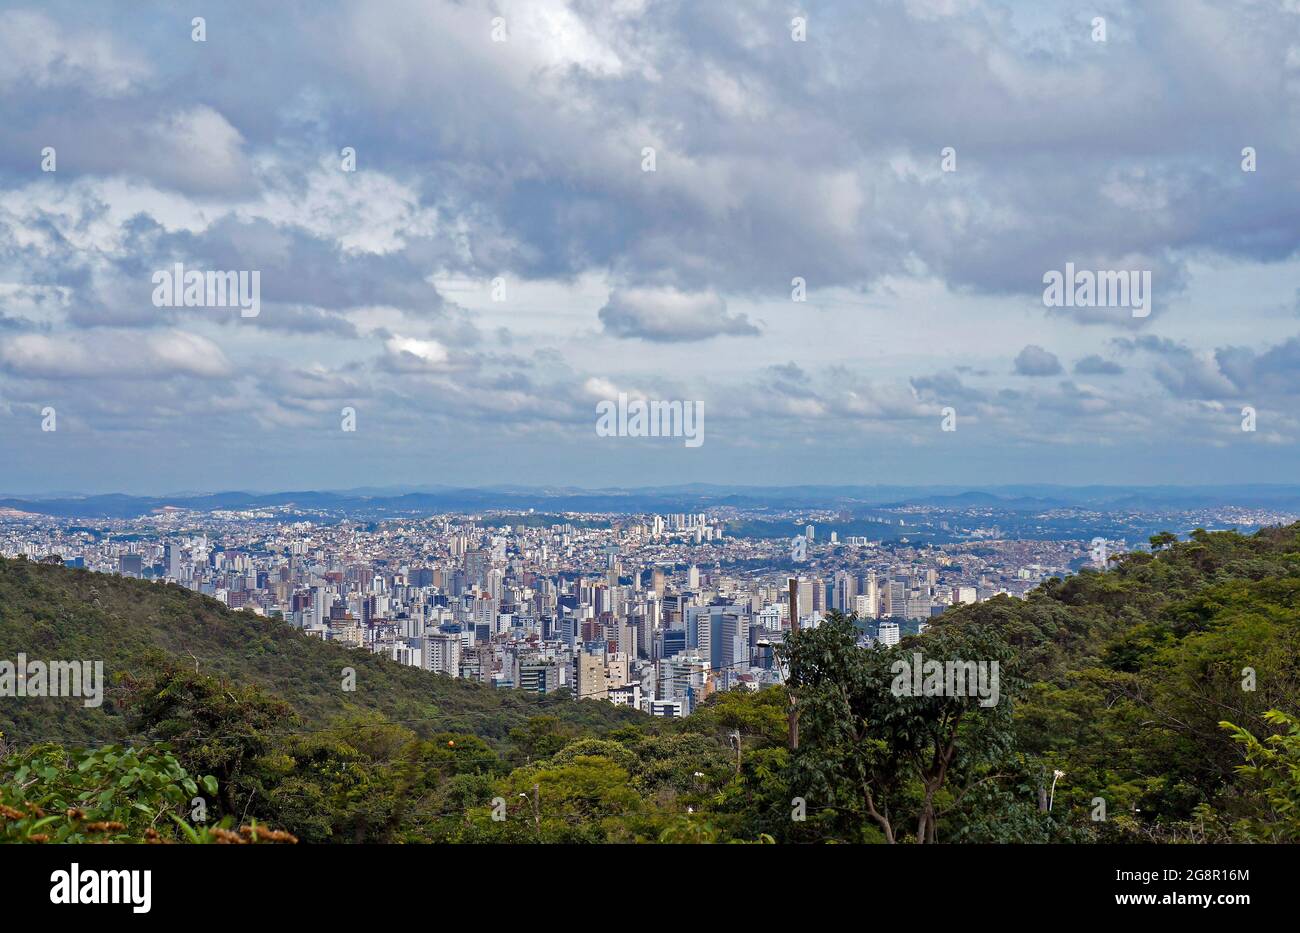 Vista panoramica di Belo Horizonte, Minas Gerais, Brasile Foto Stock